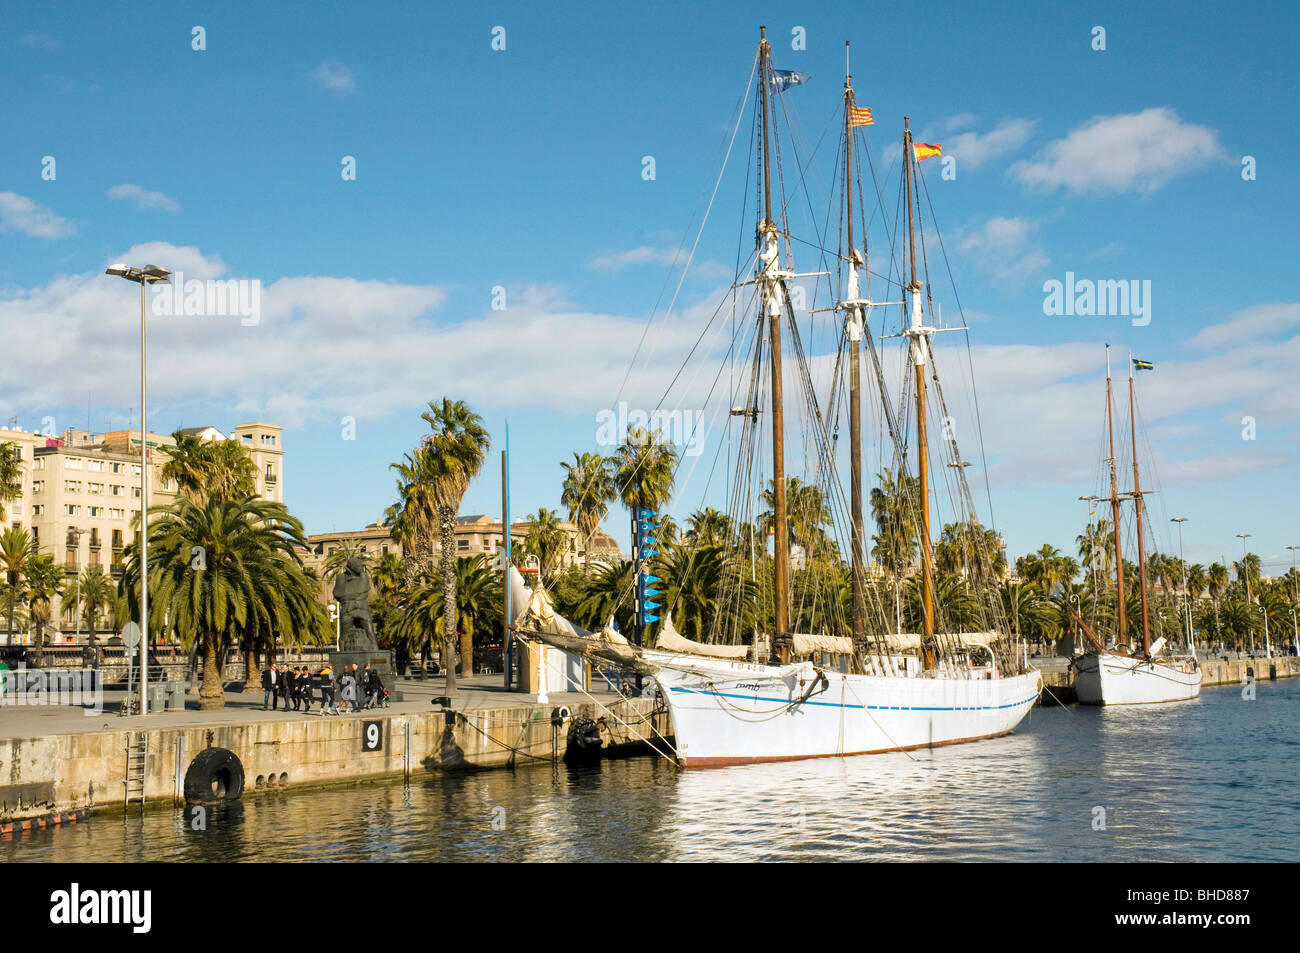 Boats in Port Vell, Barcelona, Spain Stock Photo